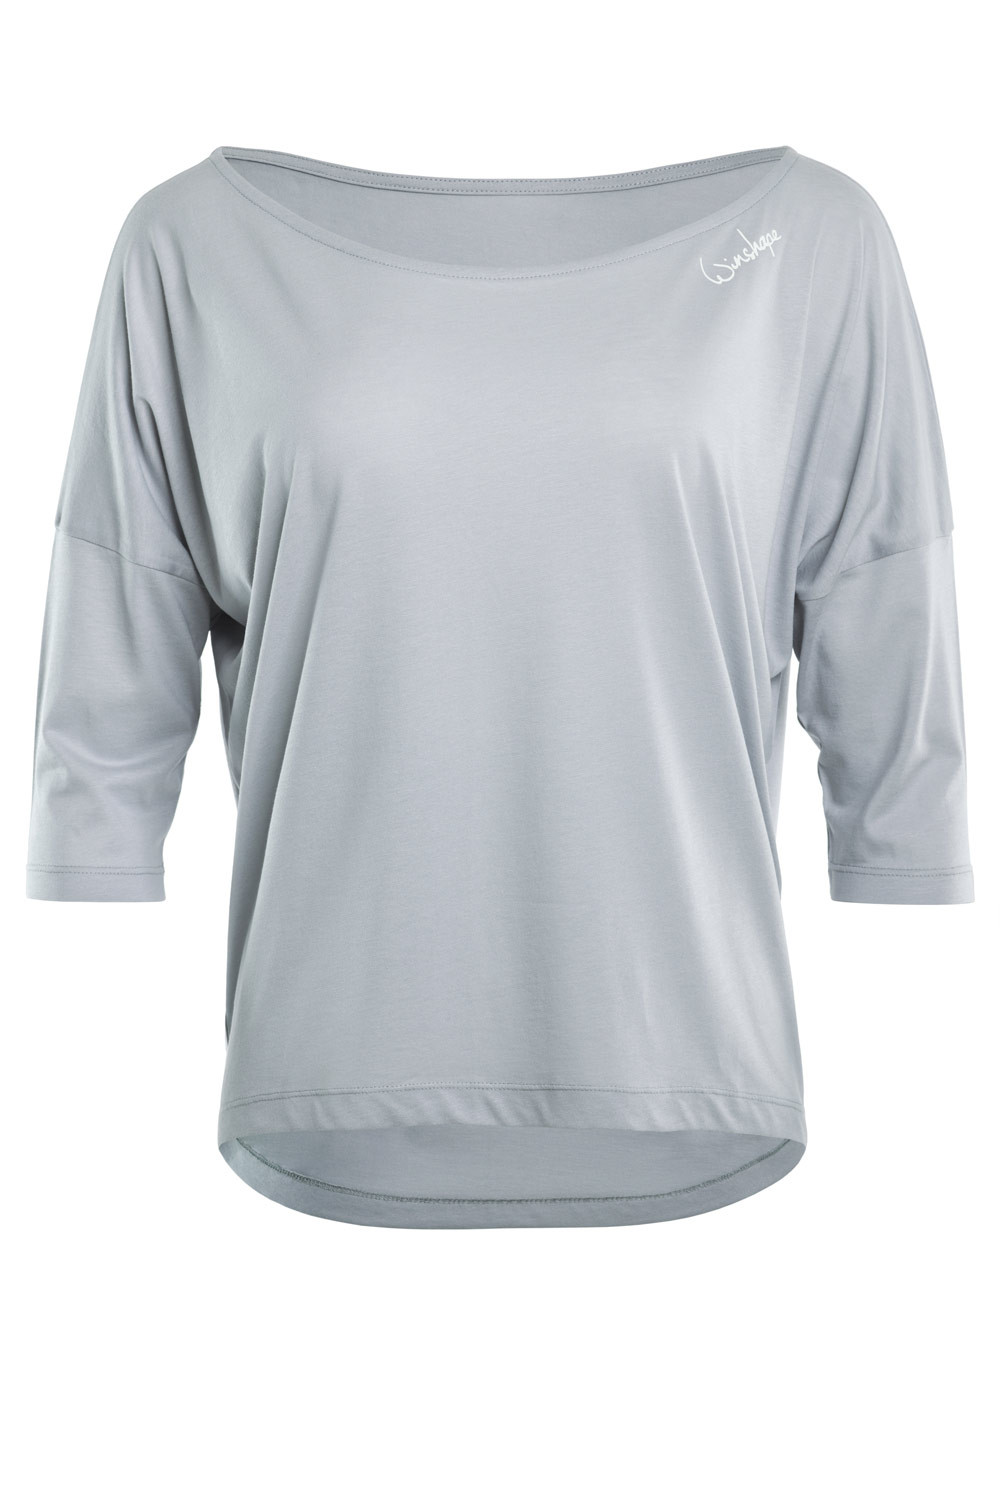 Ultra leichtes Modal-3/4-Arm Shirt MCS001, cool grey, Winshape Dance Style